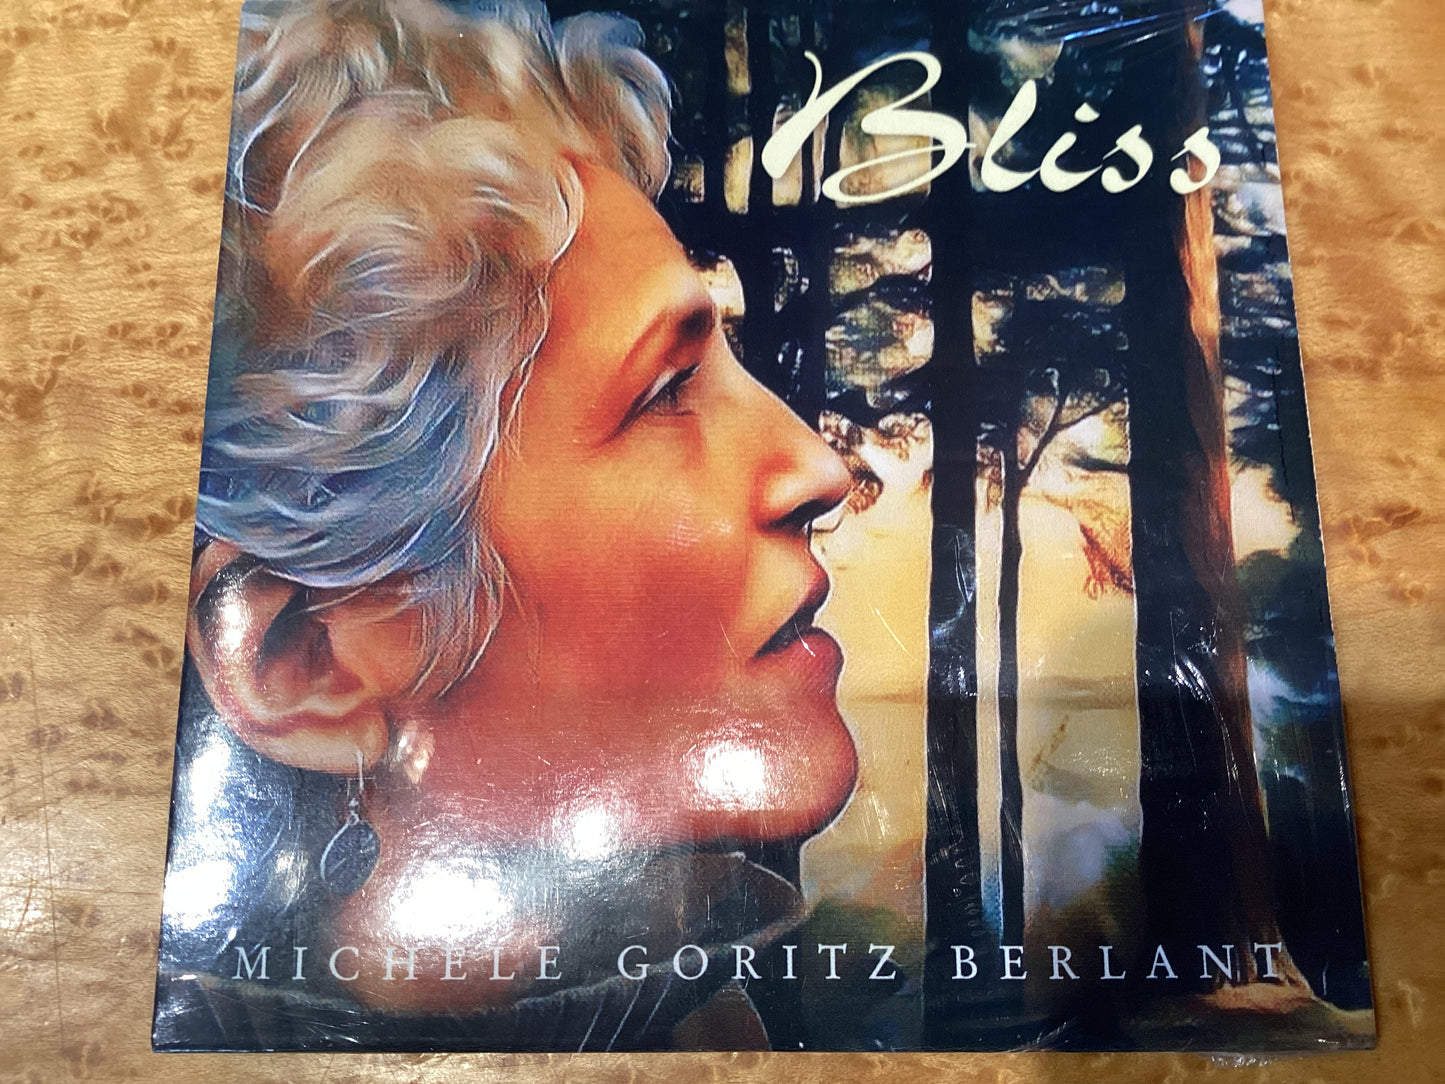 Bliss CD by Michele Goritz Berlant